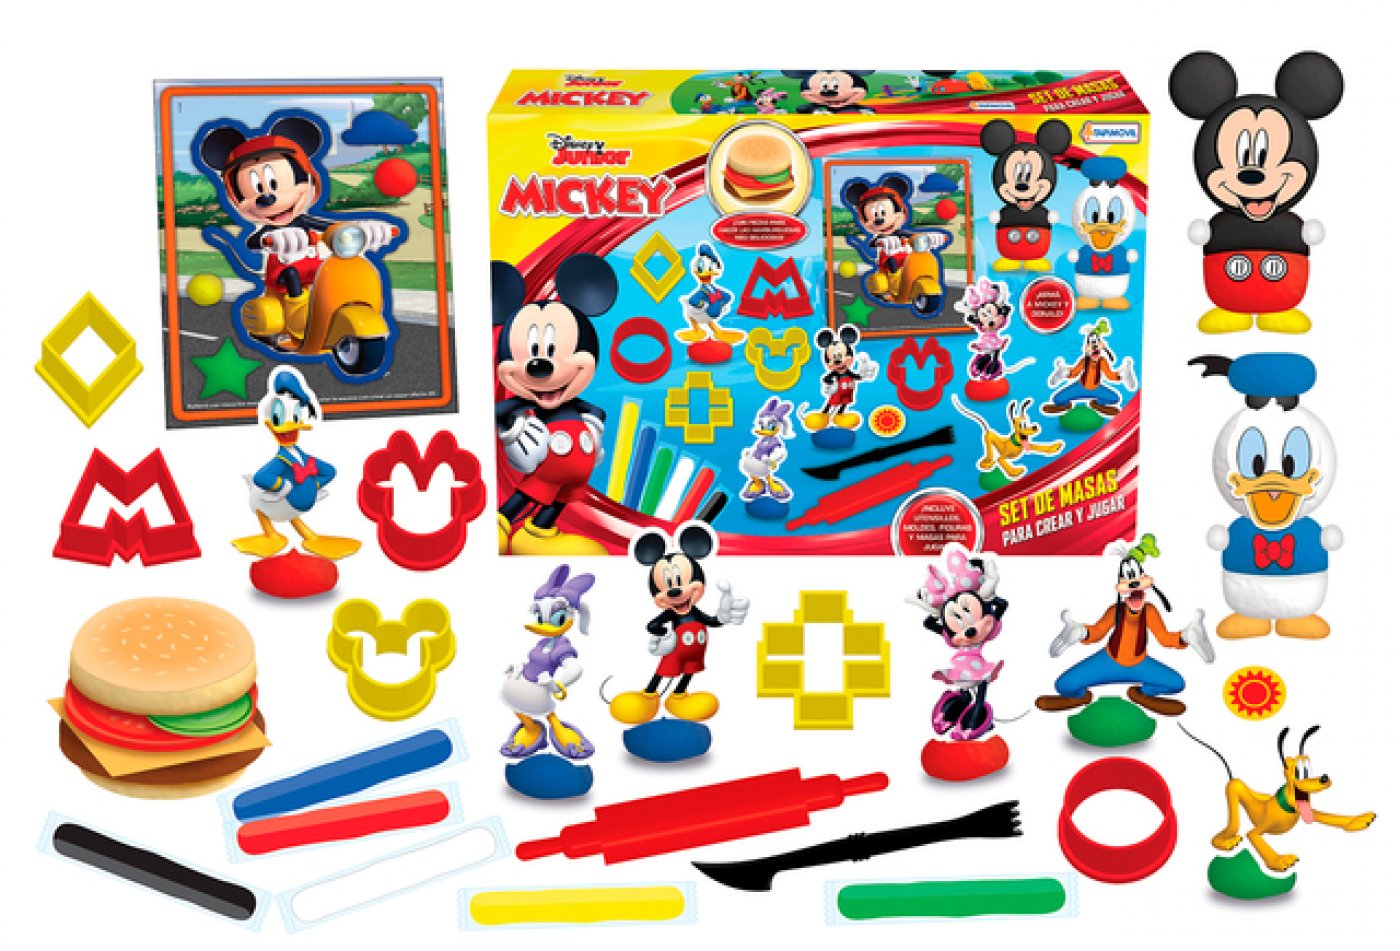 Set Masas Mickey Tapimovil Para Crear Y Jugar Disney